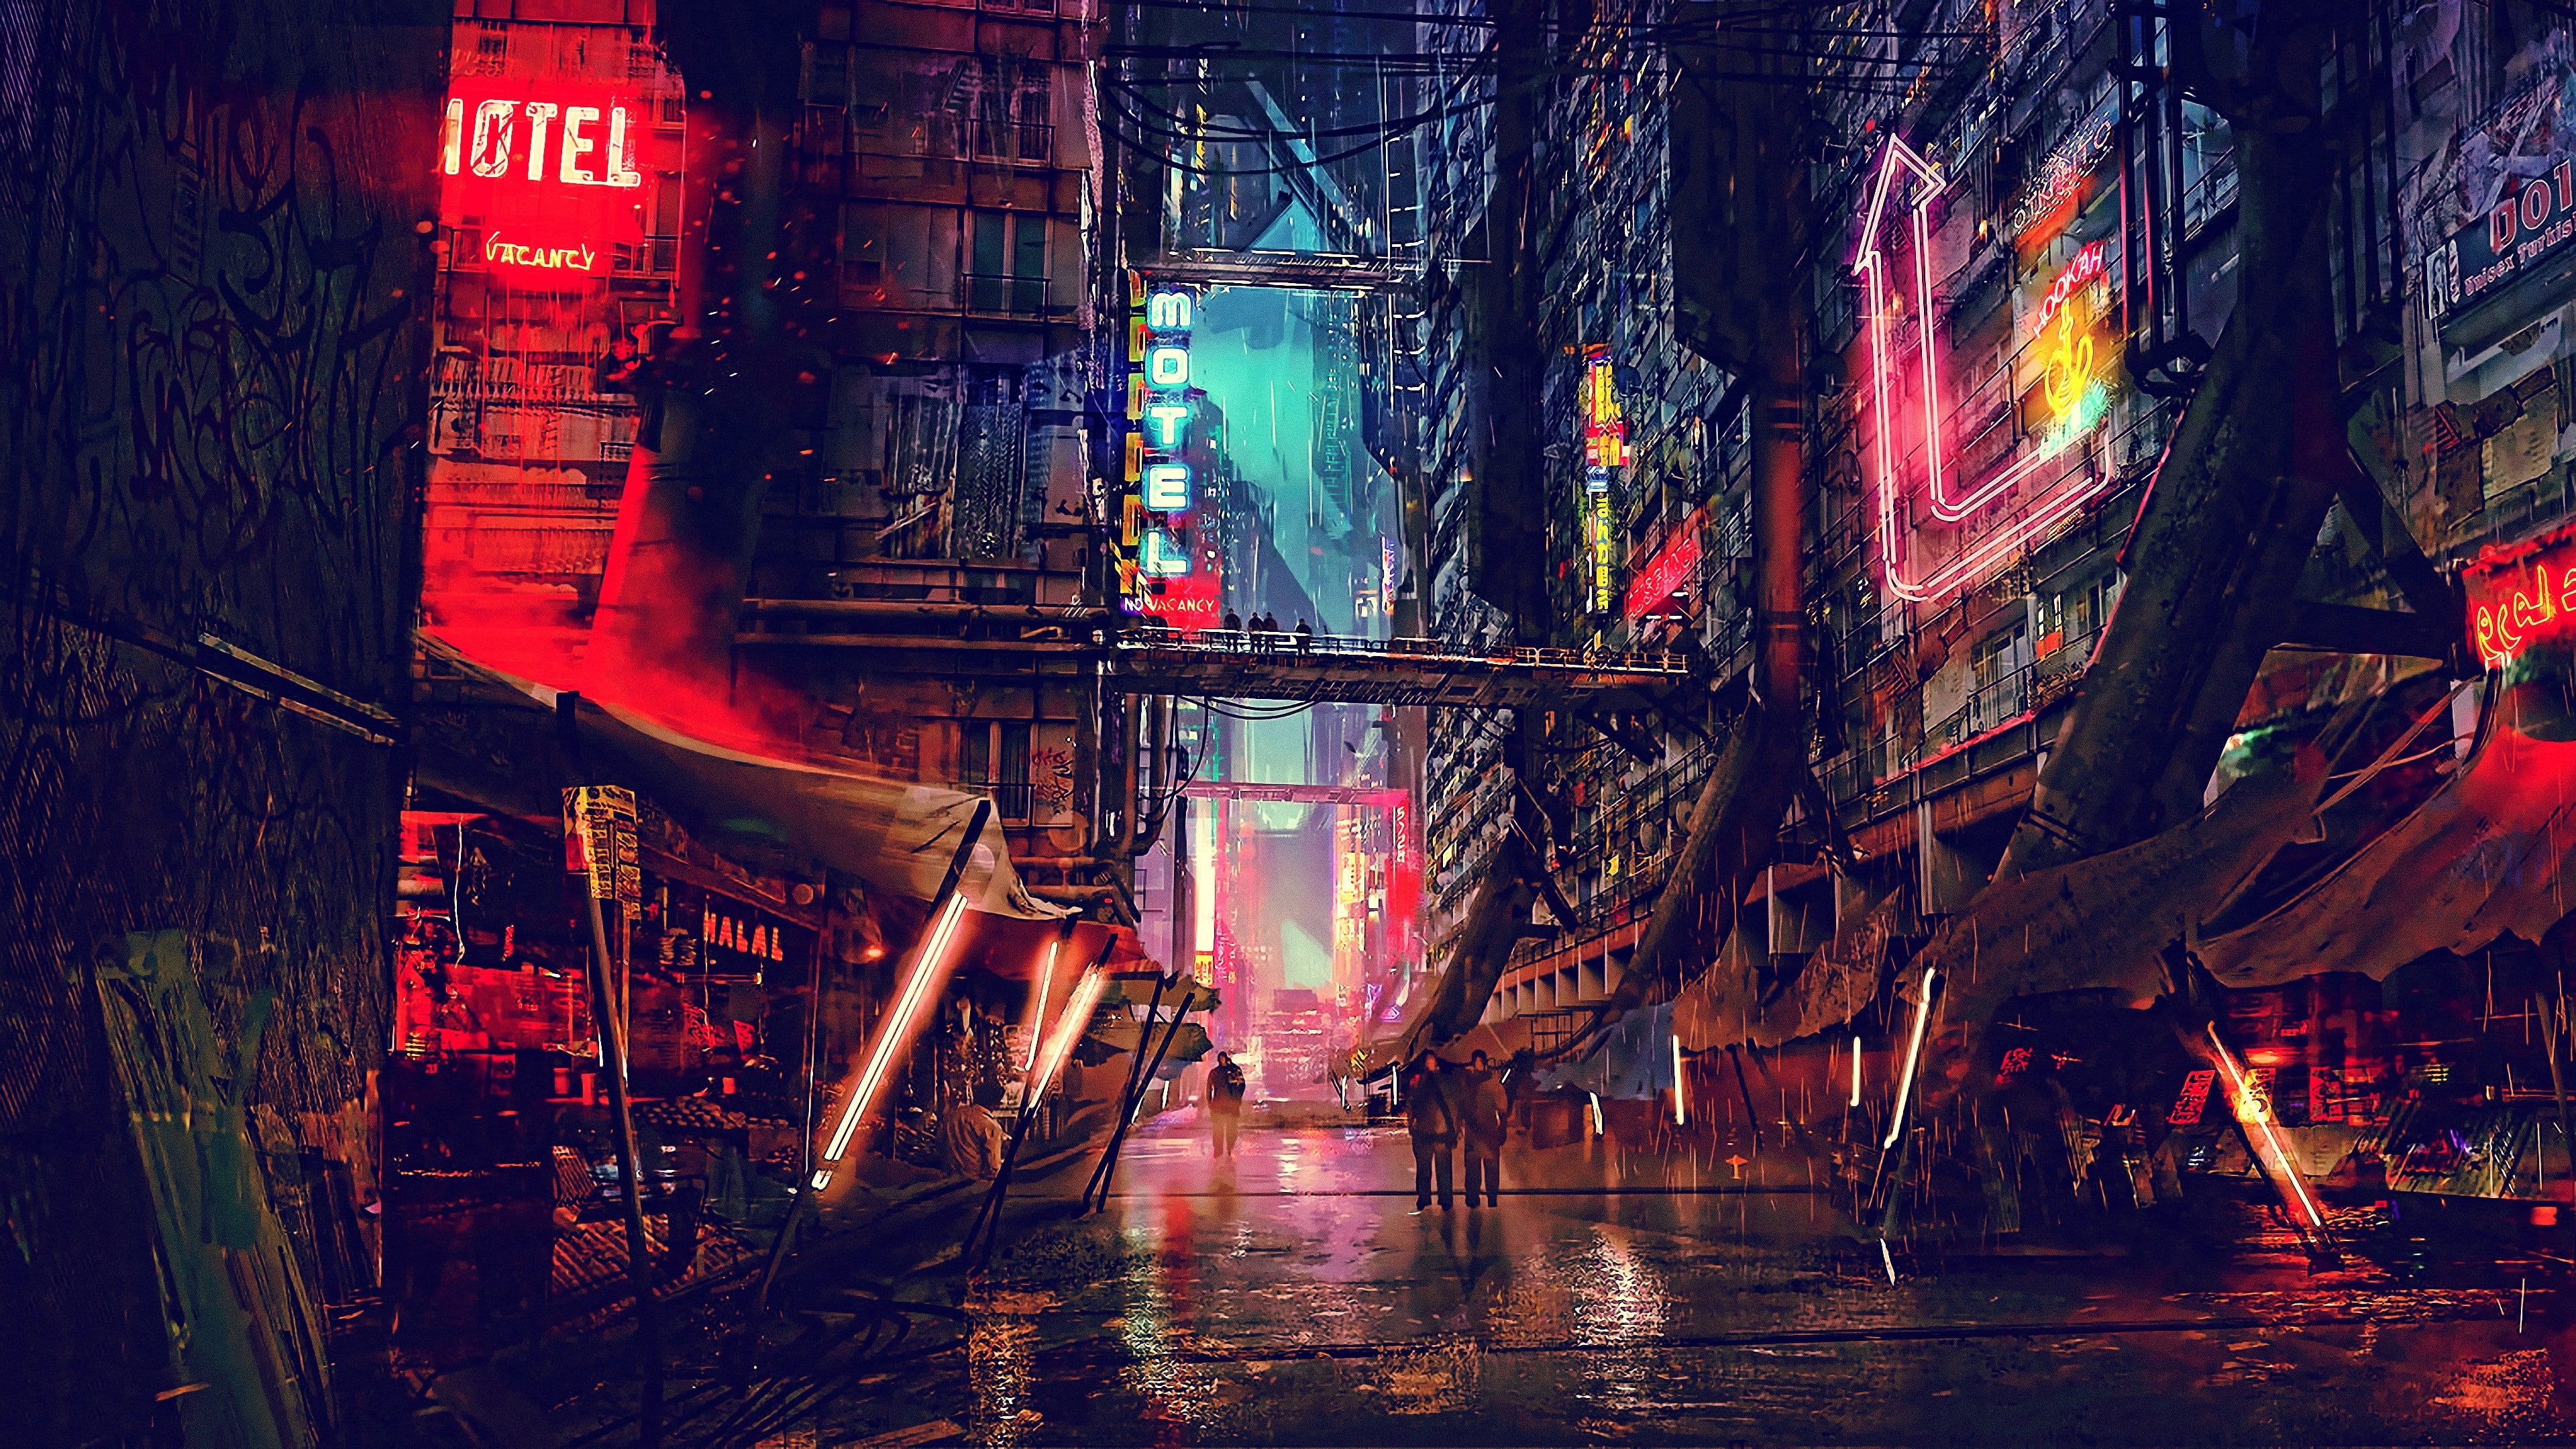 street #art #artwork digital art futuristic city #darkness science fiction #scifi #cyberpunk #city #night. Futuristic city, City wallpaper, Building illustration